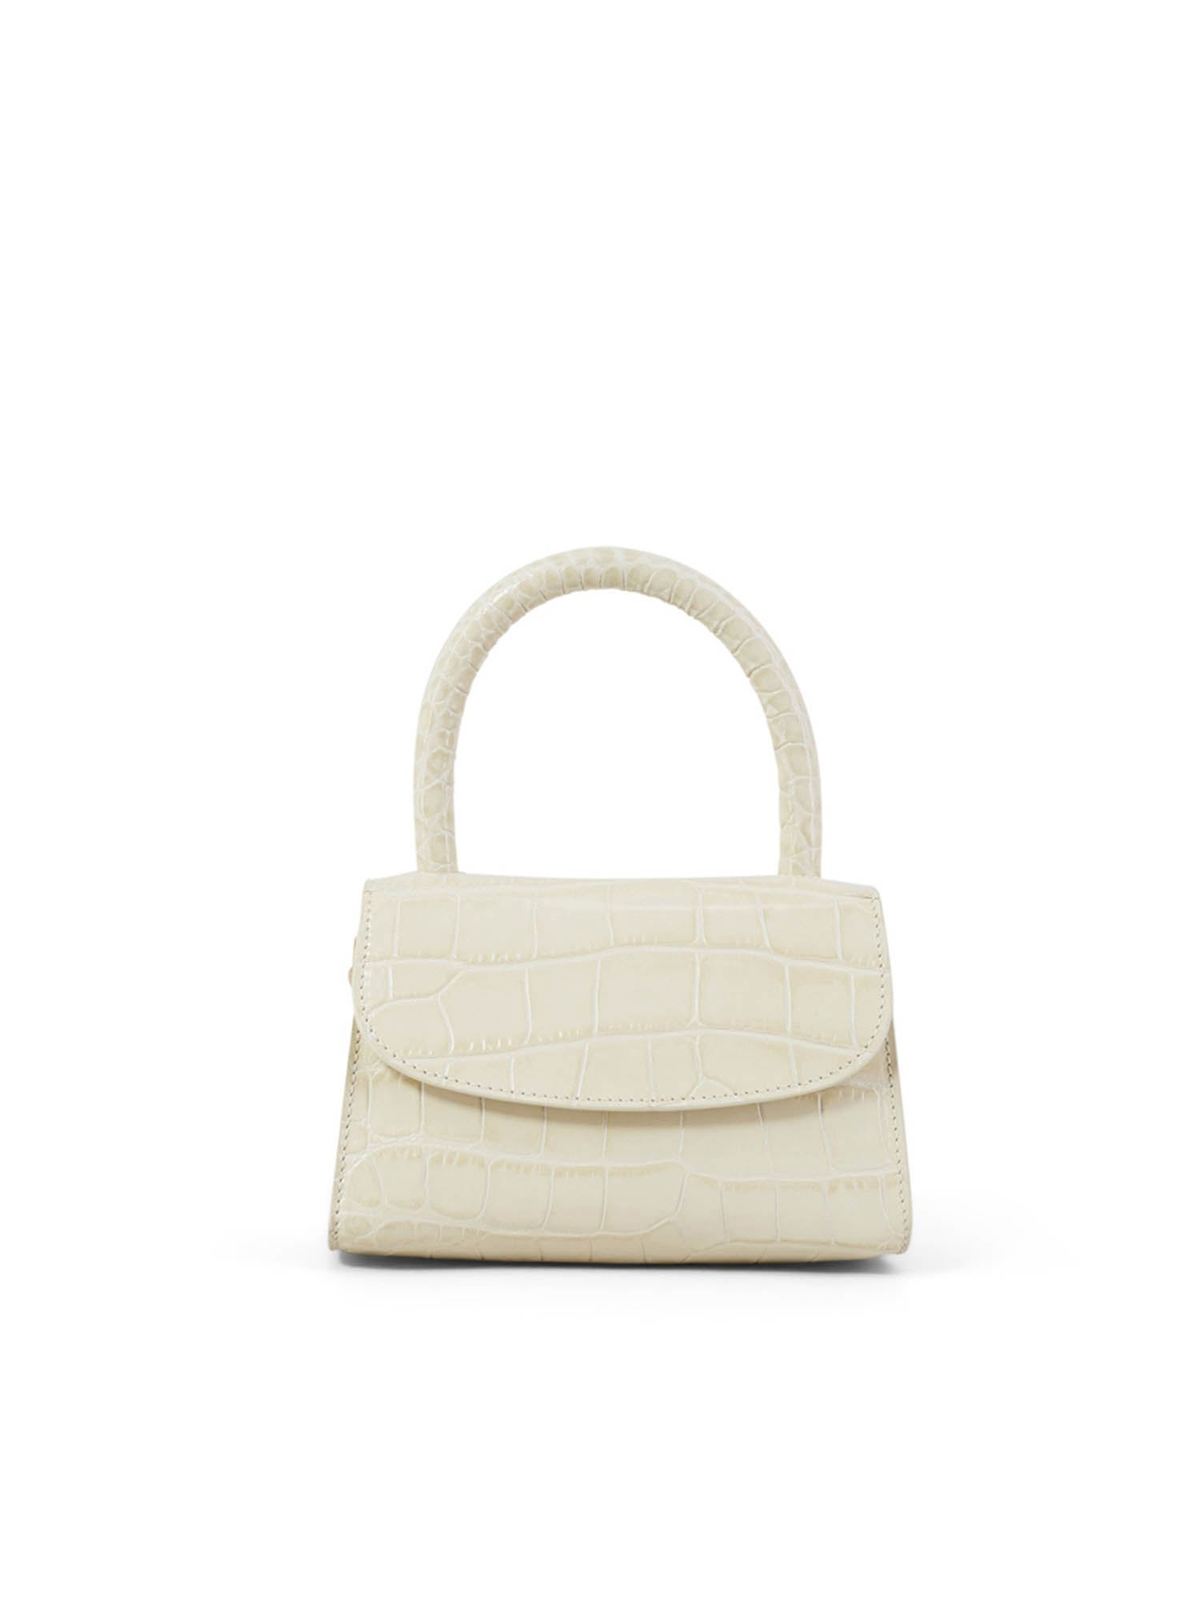 Totes bags By Far - Mini handbag in cream color - 19PFMINACEDSMA